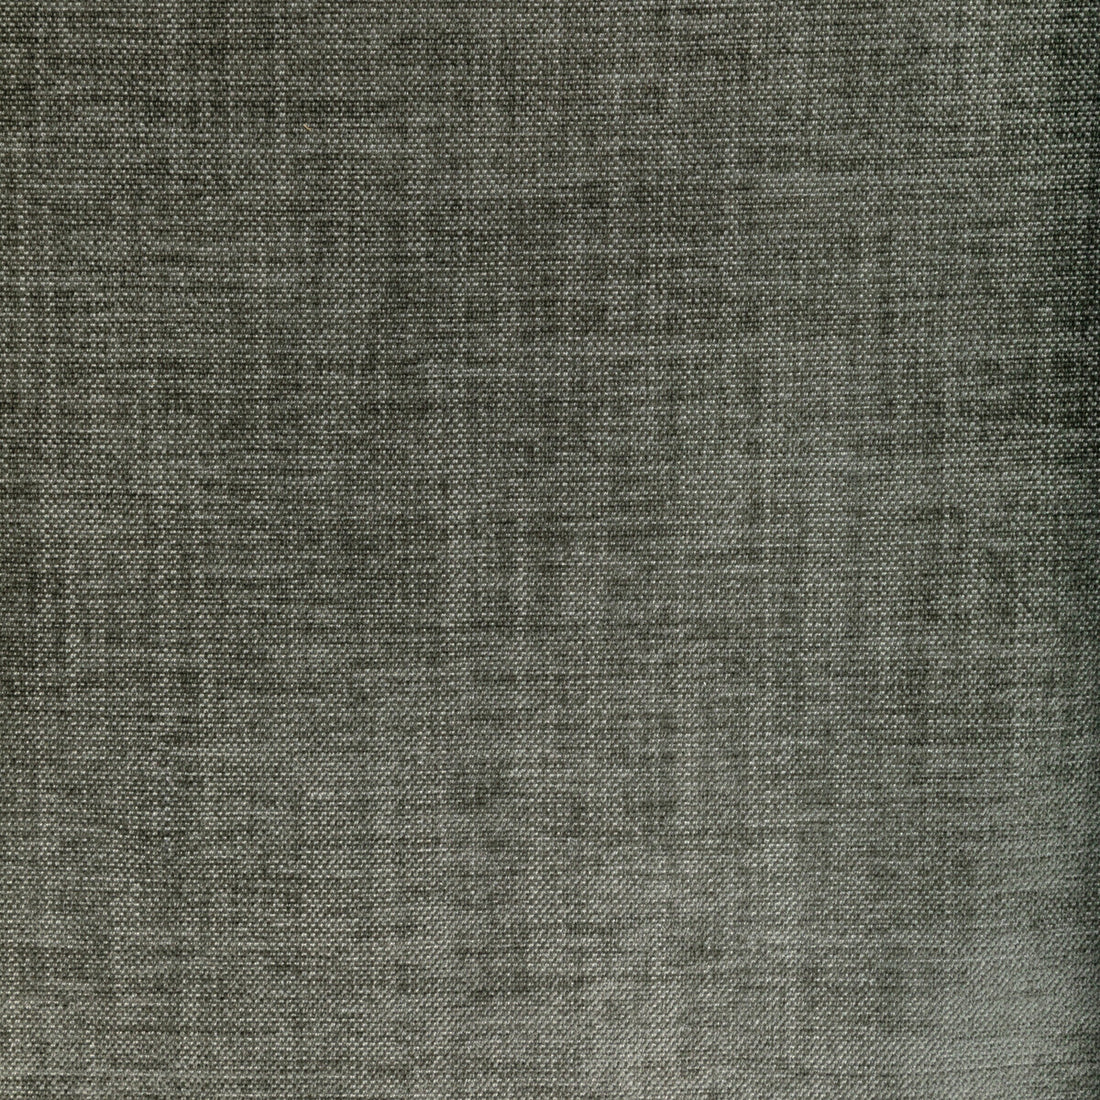 Kravet Smart fabric in 36650-1121 color - pattern 36650.1121.0 - by Kravet Smart in the Performance Kravetarmor collection